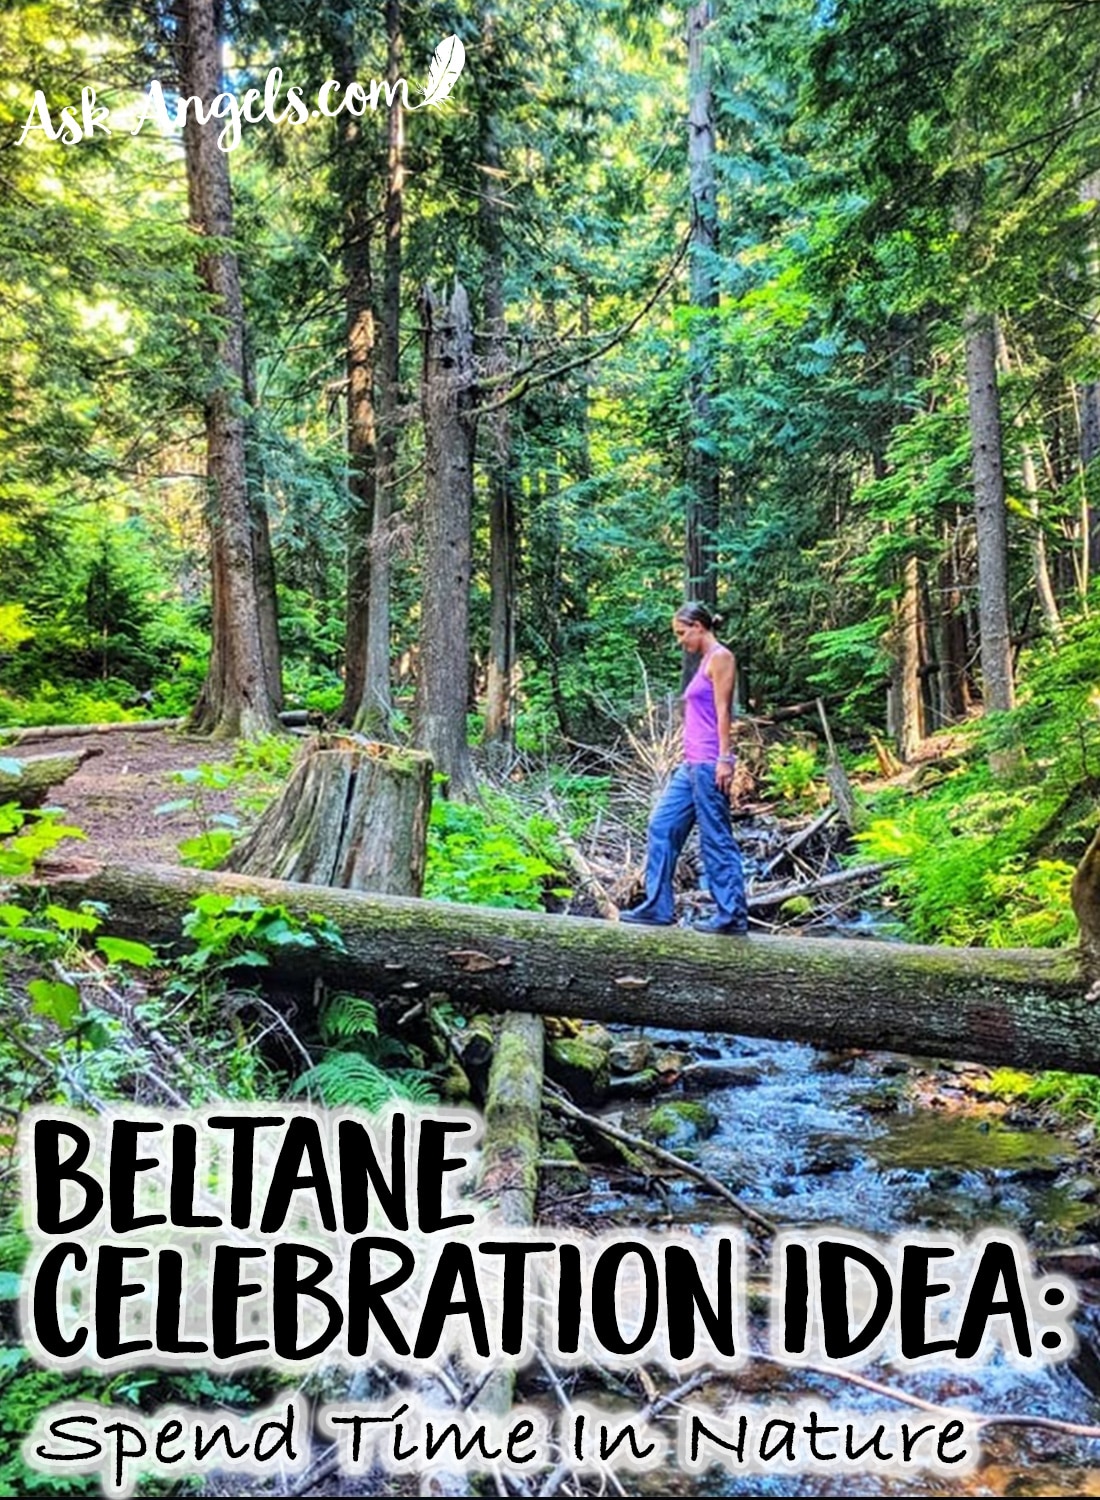 Beltane Celebration Idea - Spend Time In Nature